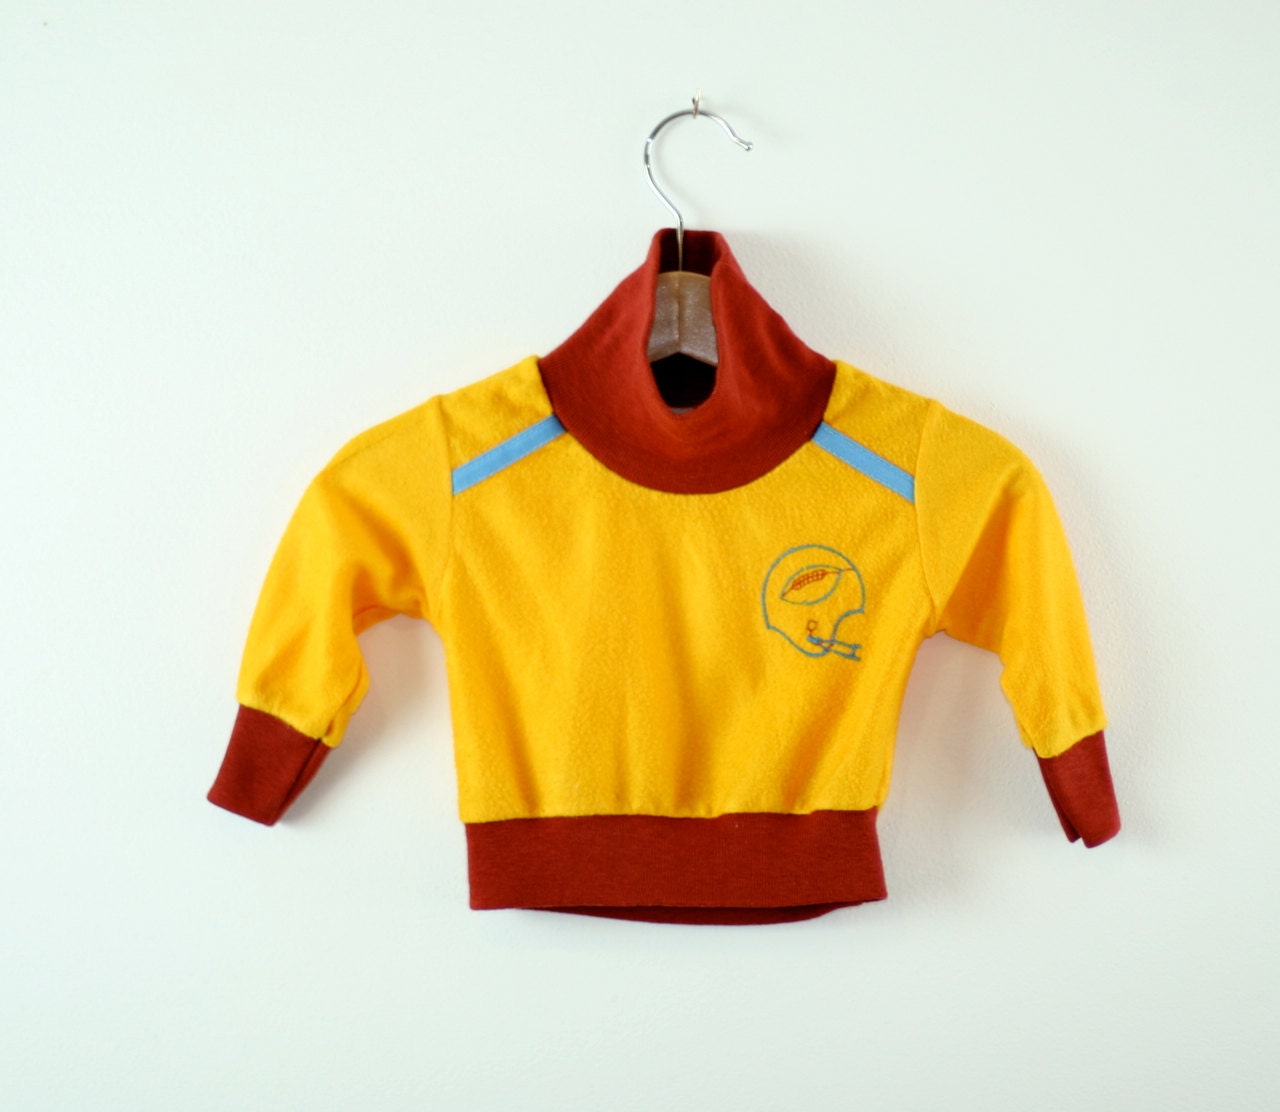 Vintage Baby Sweatshirt in Gold and Maroon Football Theme - udaskids